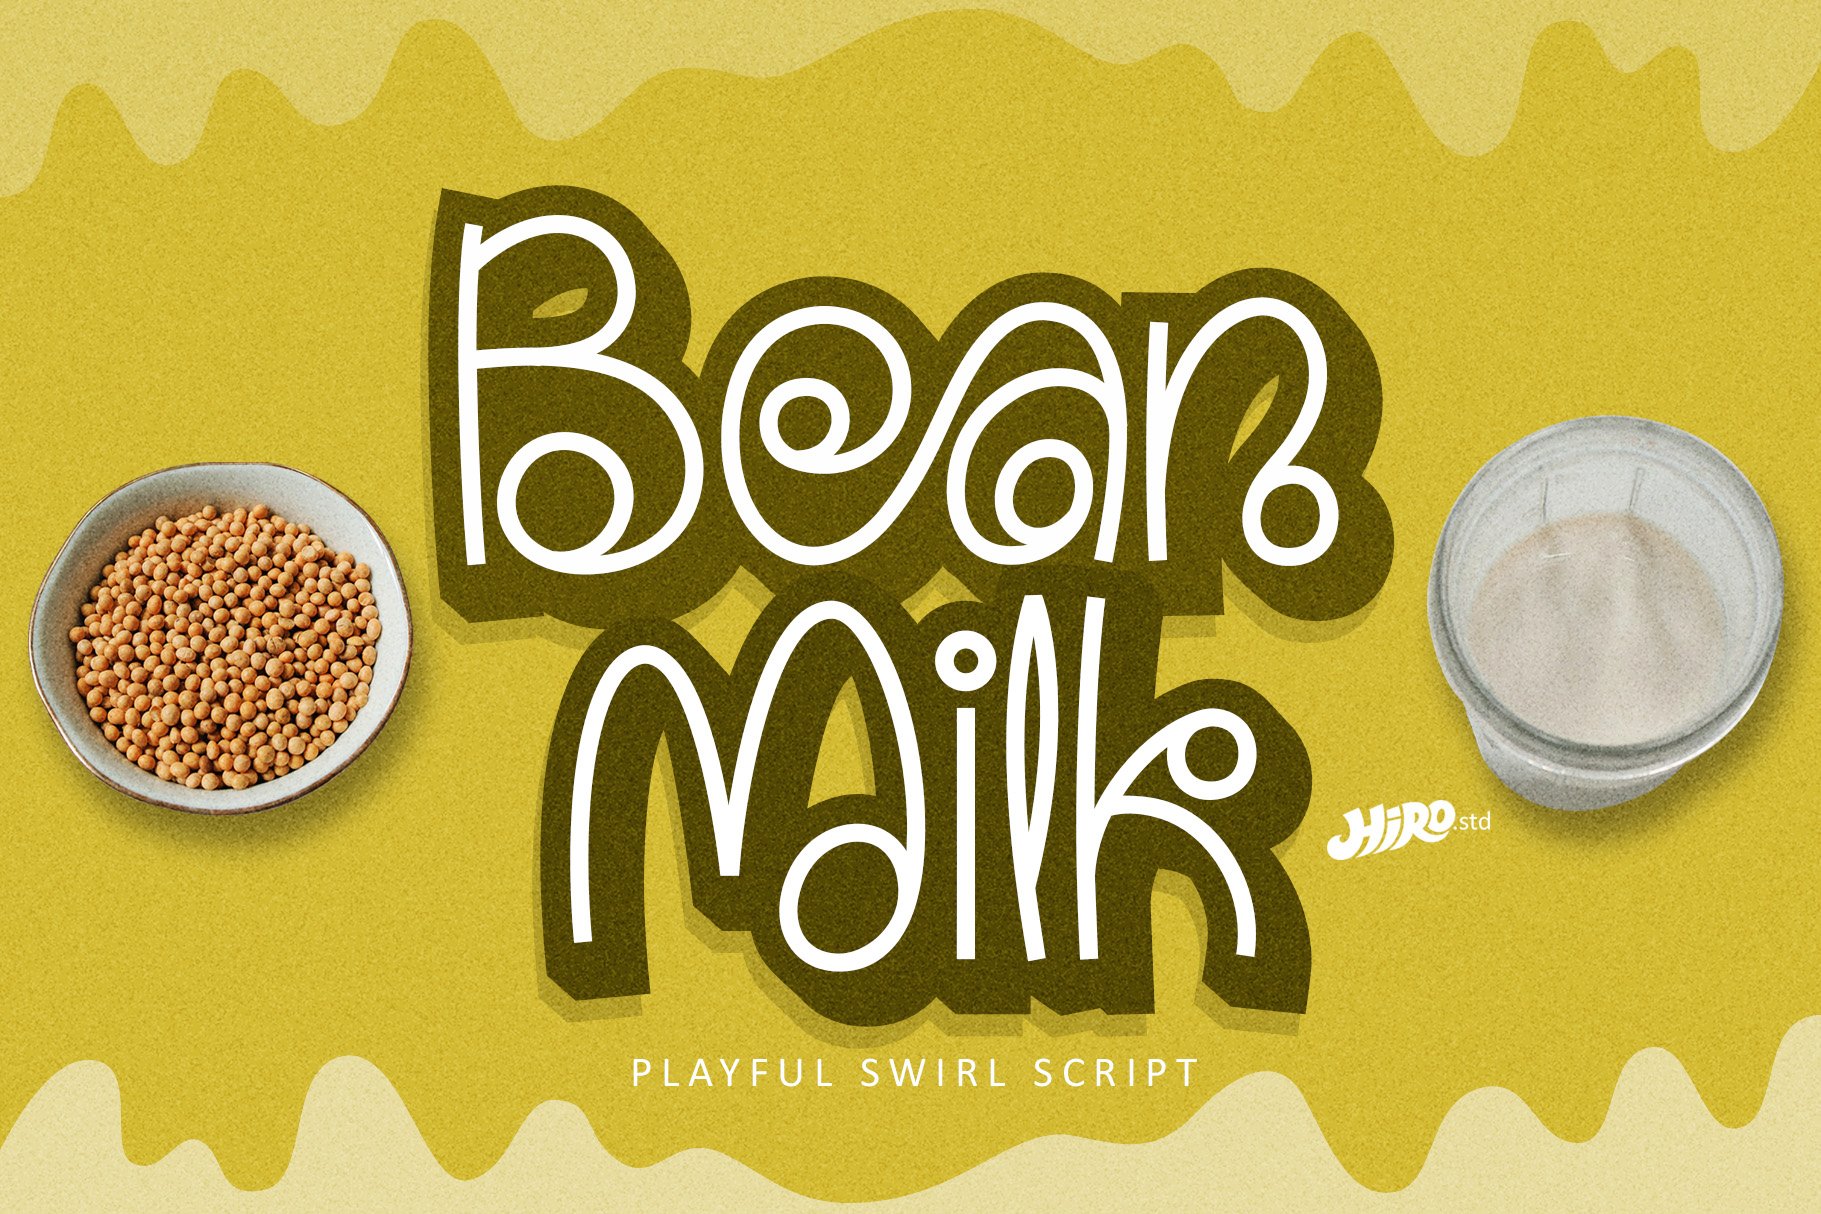 Bean Milk - Playful Swirl Script cover image.